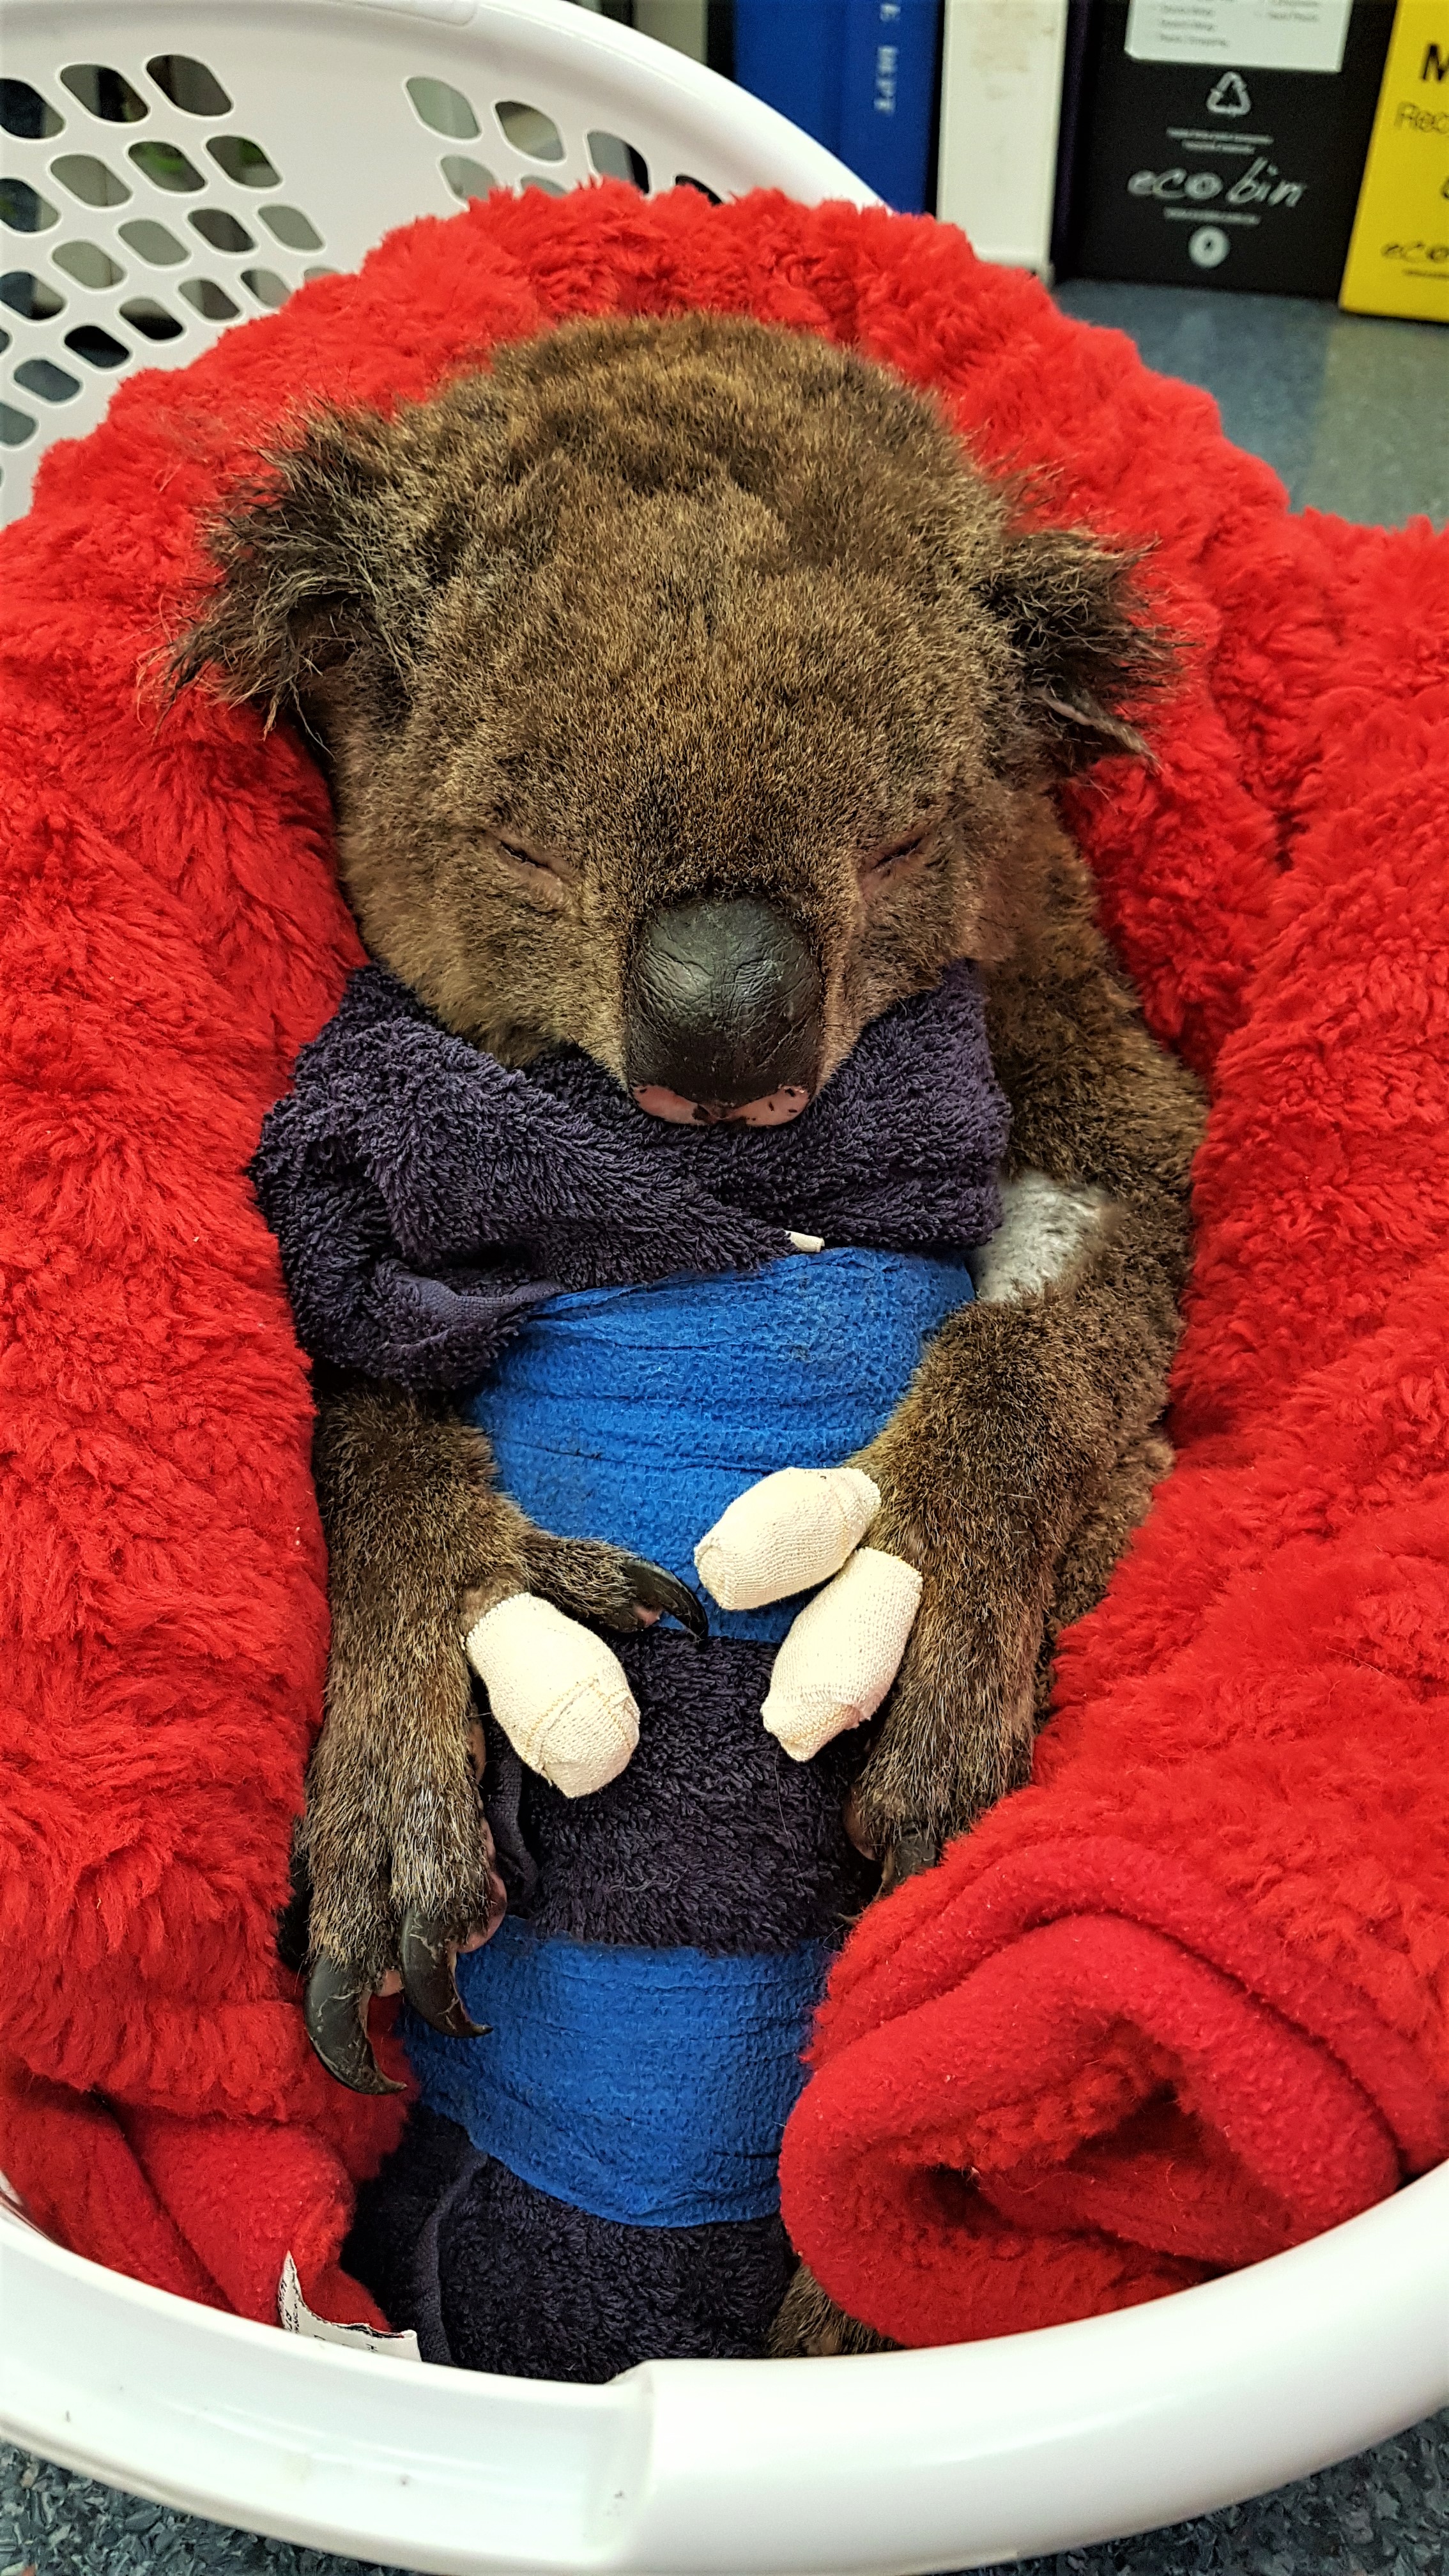 https://cdn.aucklandunlimited.com/zoo/assets/media/20200209-135209-koala-in-basket-in-blanket.jpg